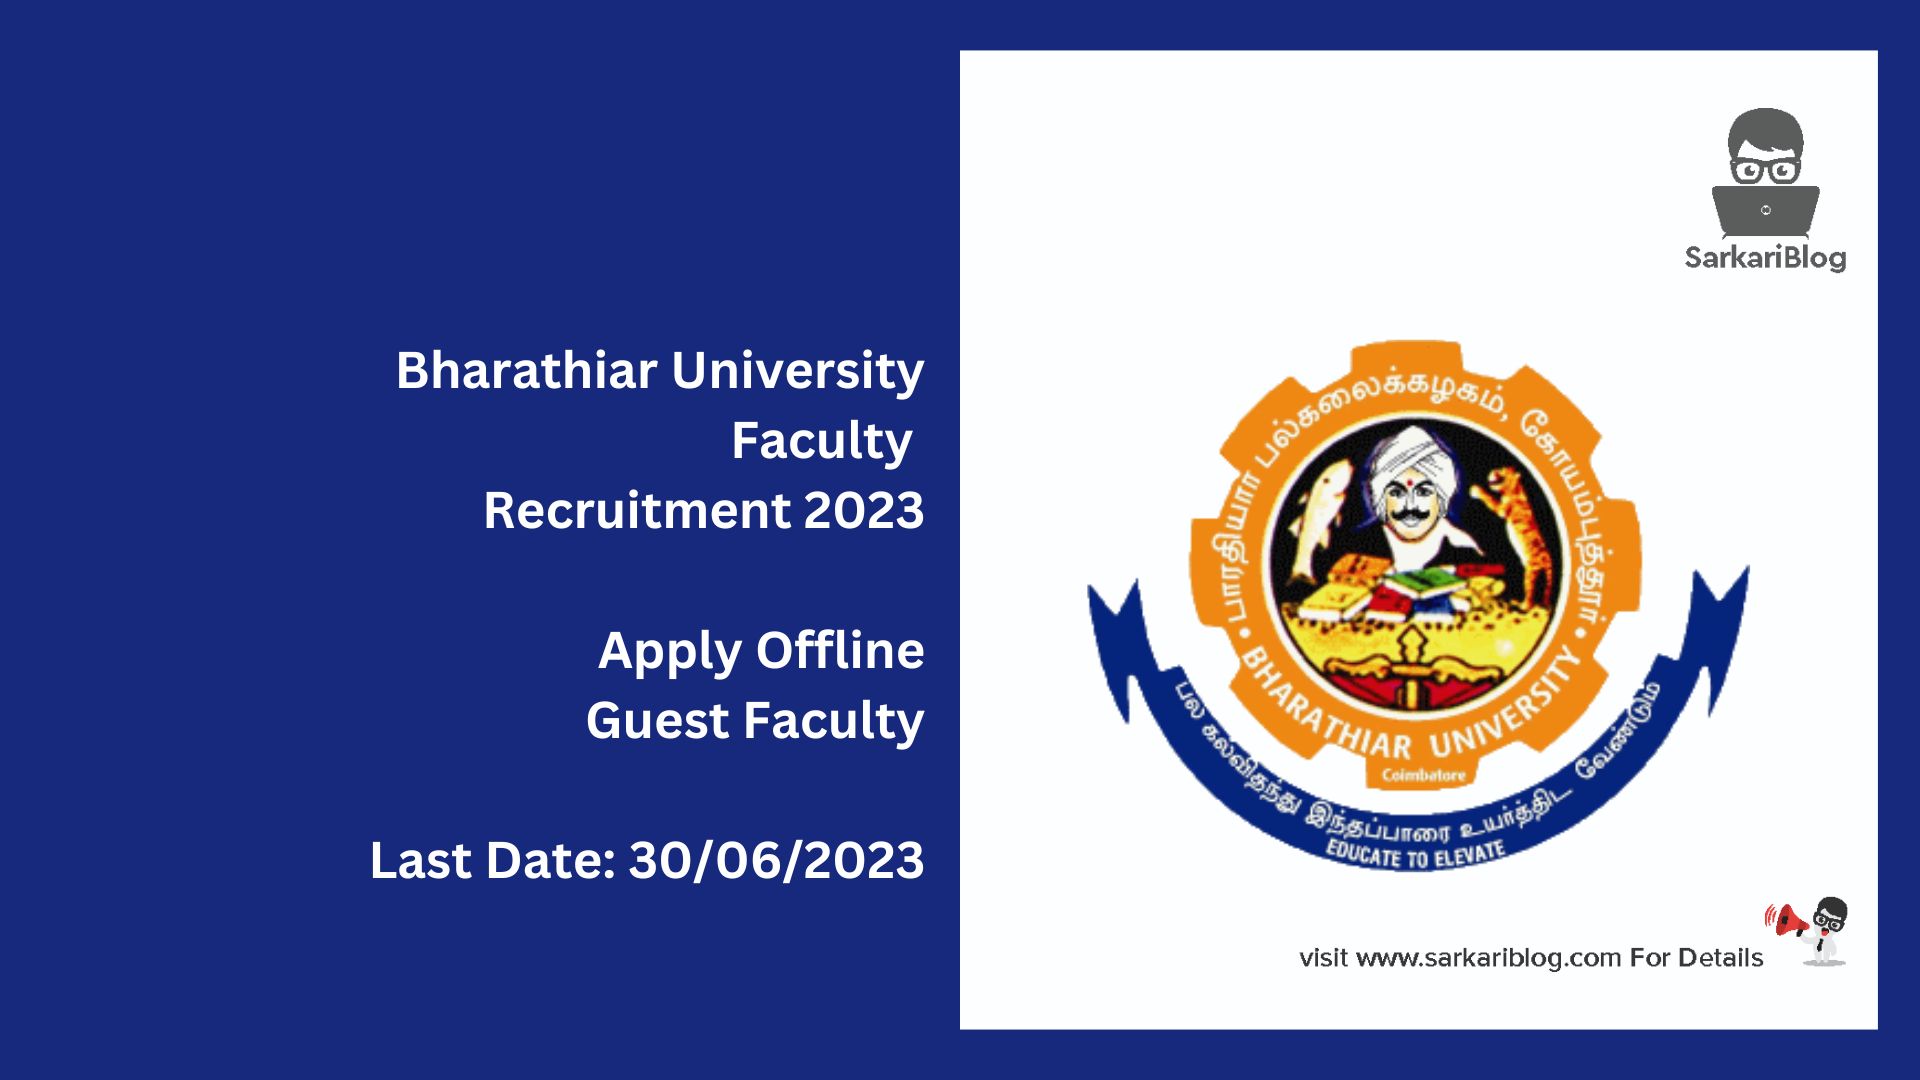 Bharathiar University Faculty Recruitment 2023